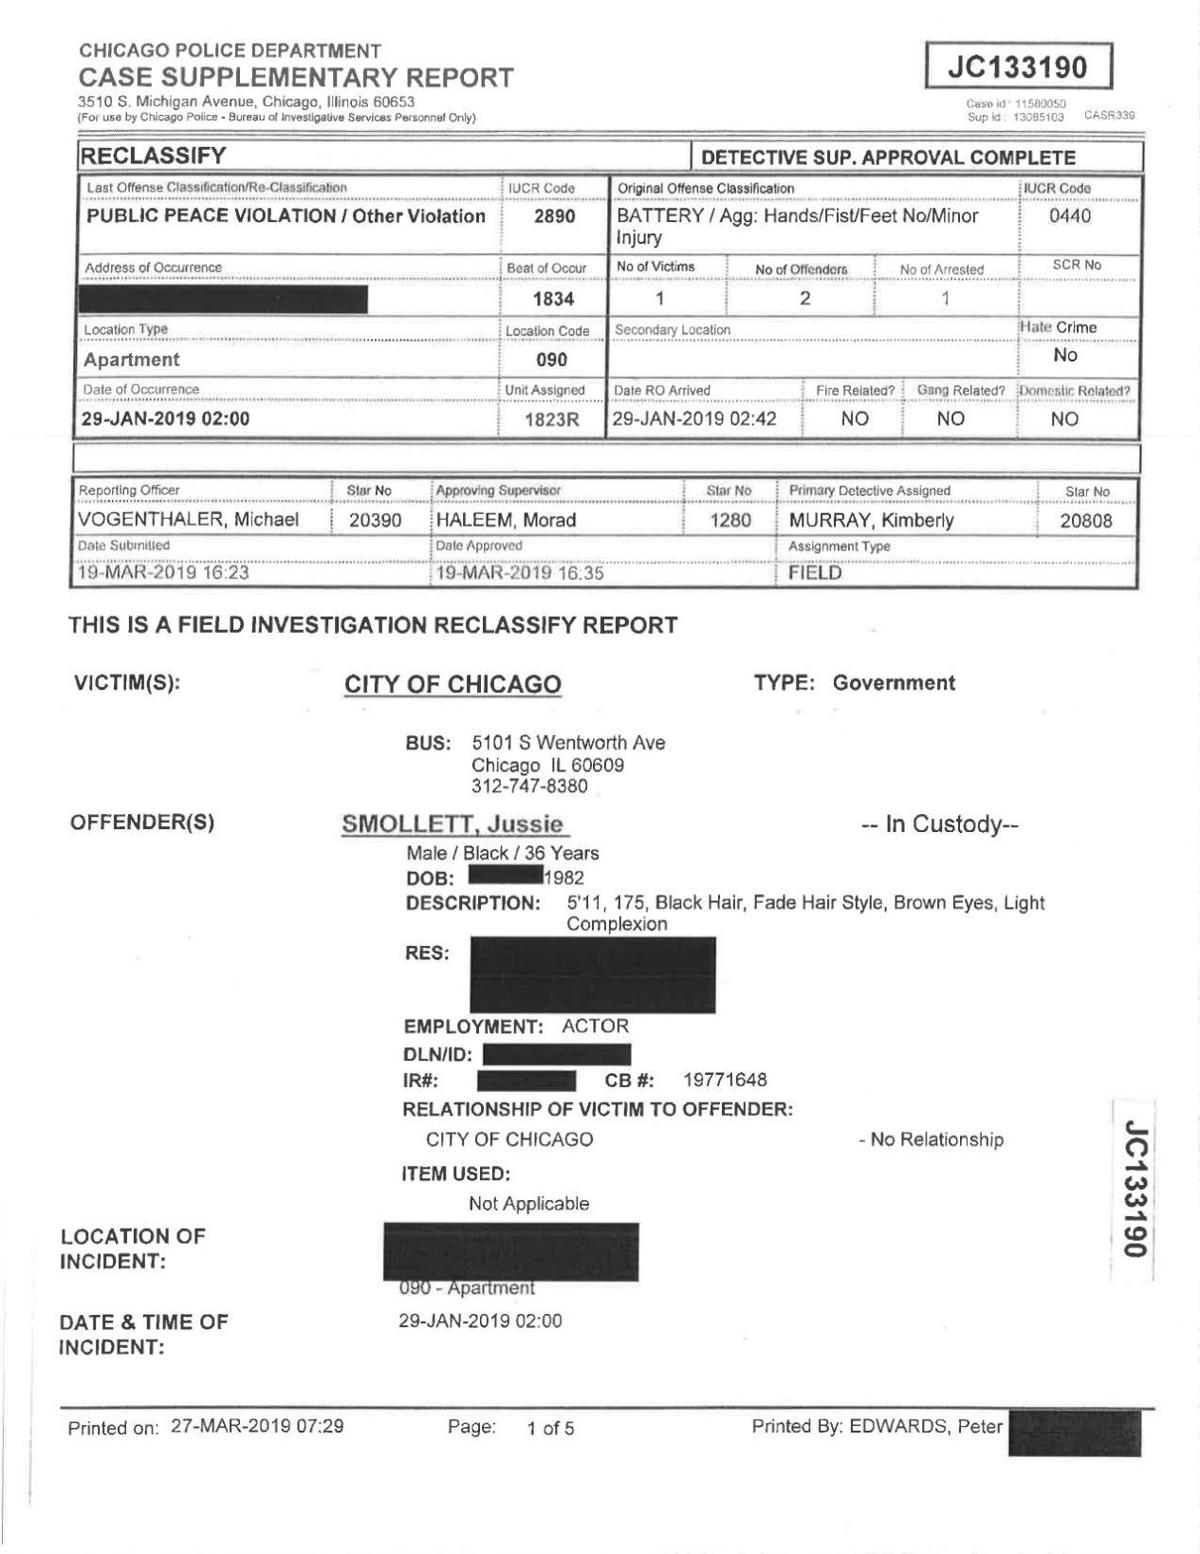 Chicago Police Department releases entire Jussie Smollett case file online | Regional ...1200 x 1554